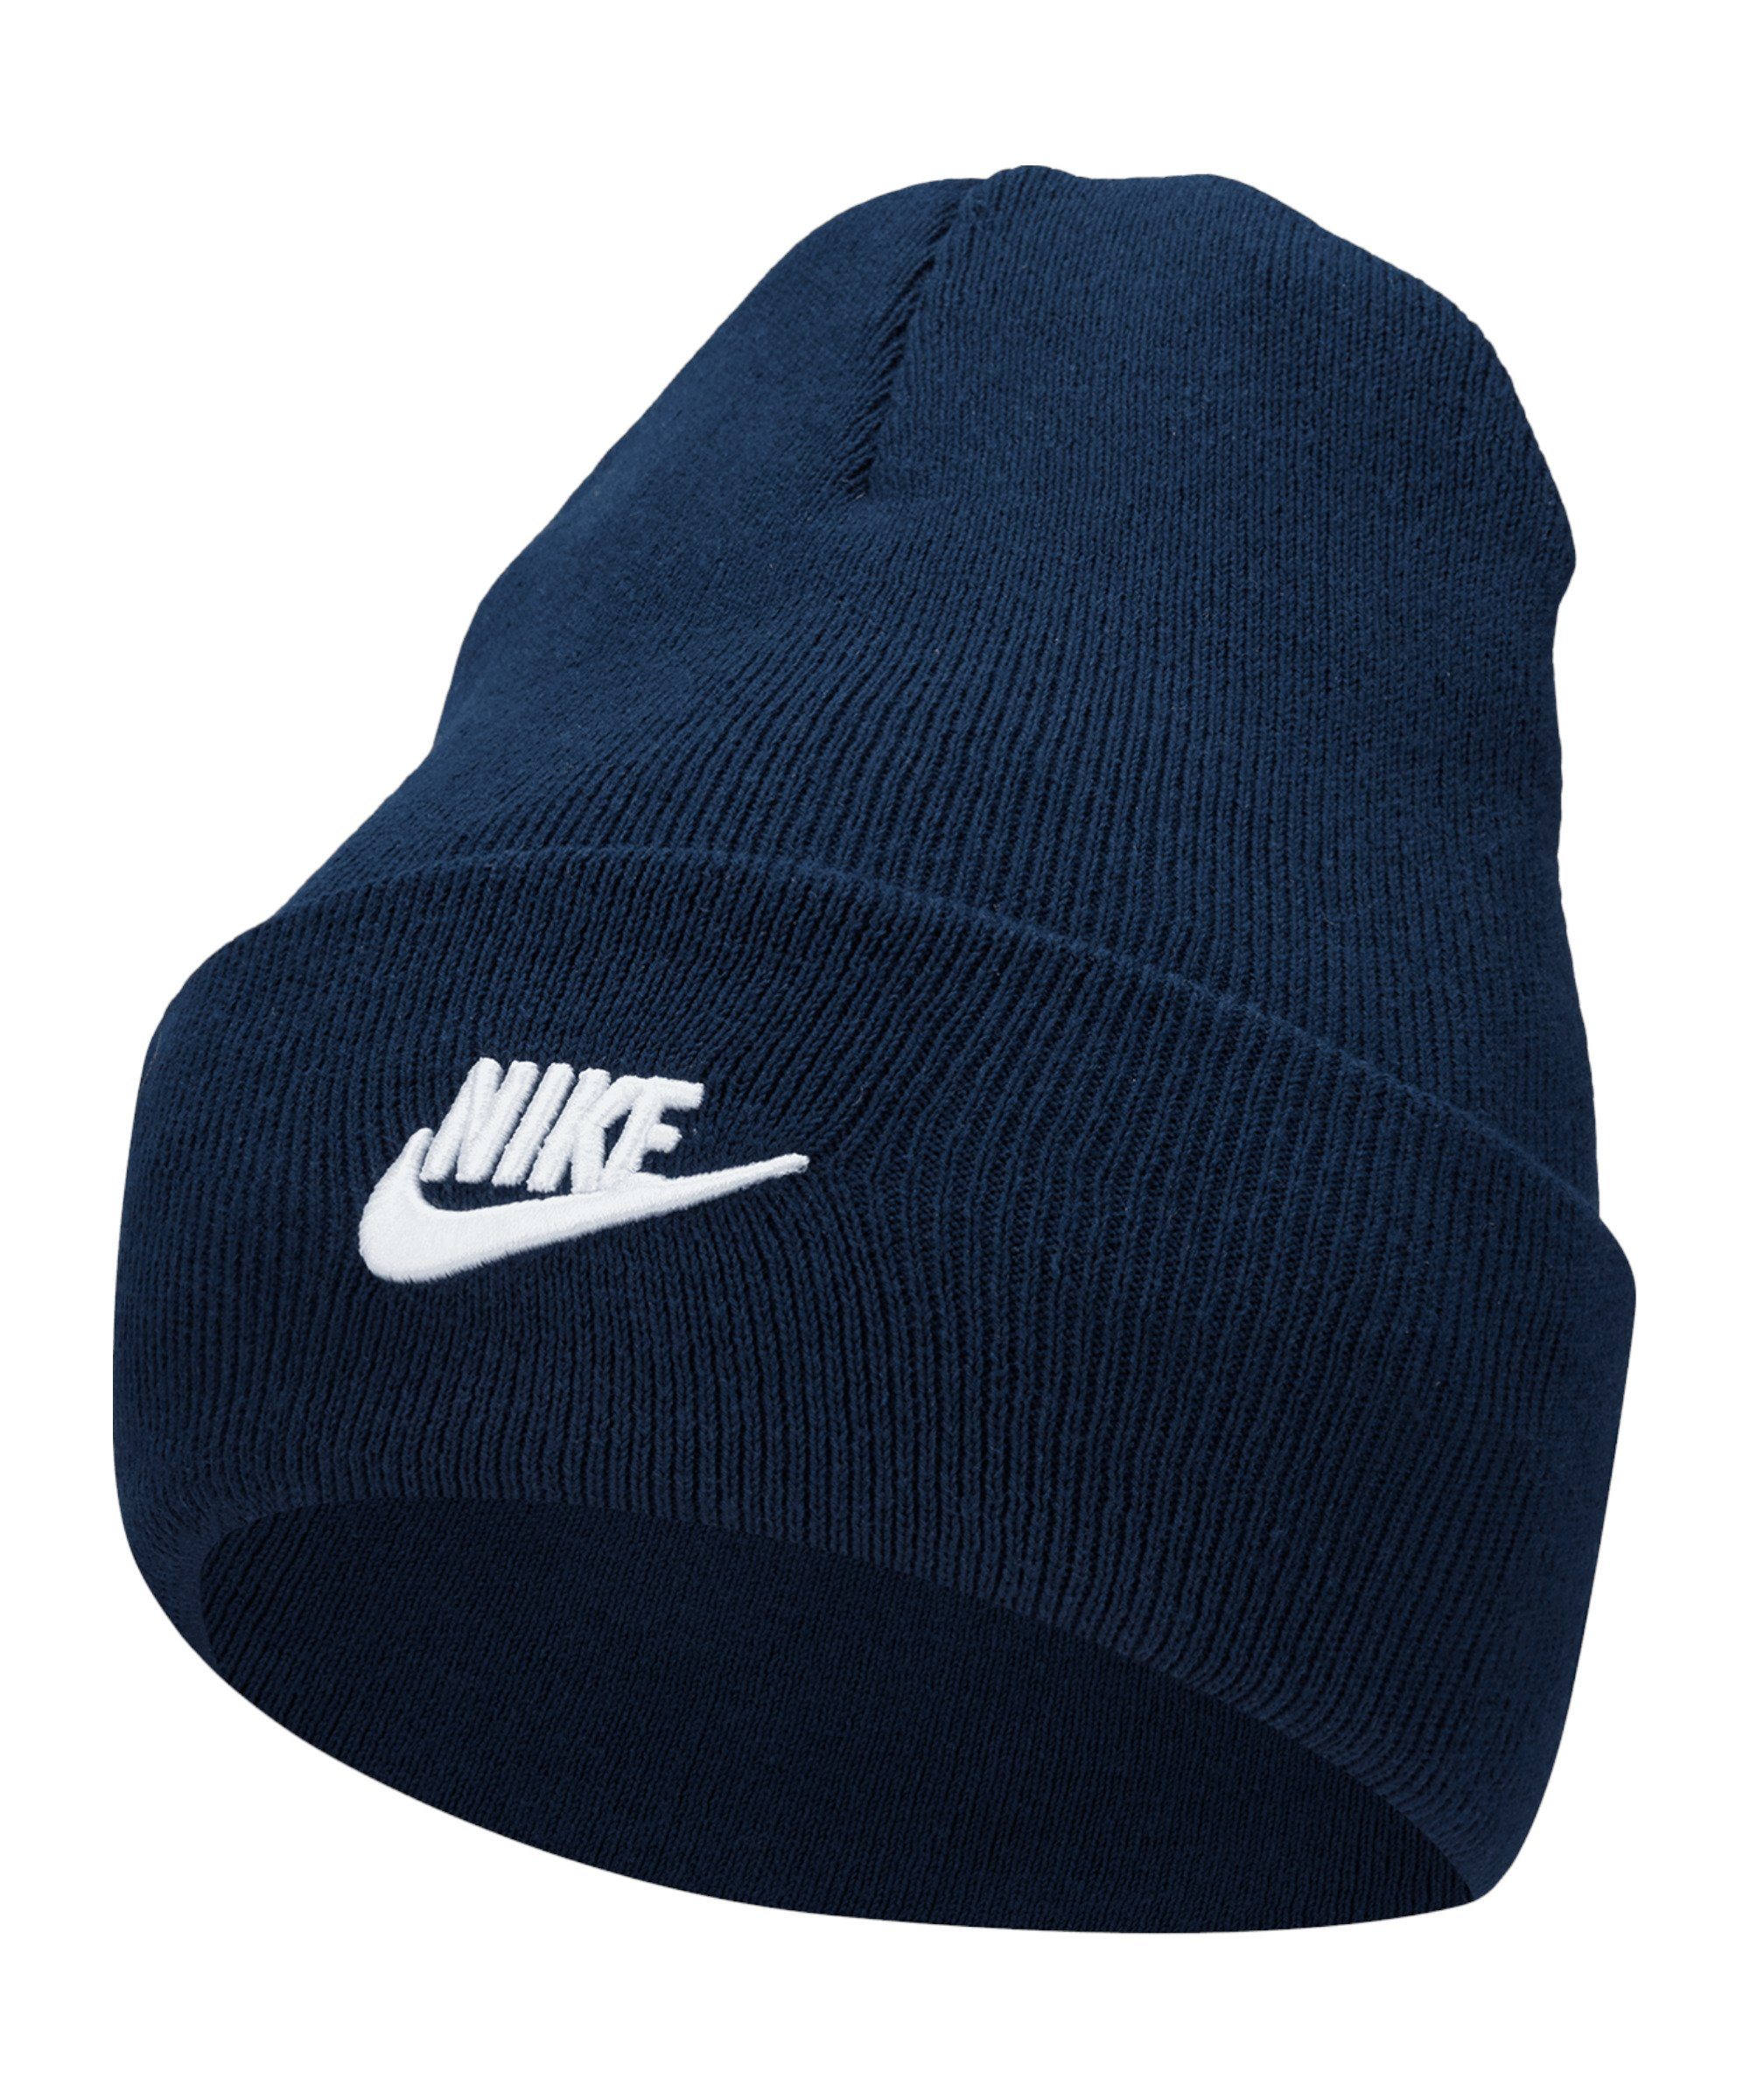 Nike Sportswear Baseball blauweiss Utilitiy Futura Mütze Cap